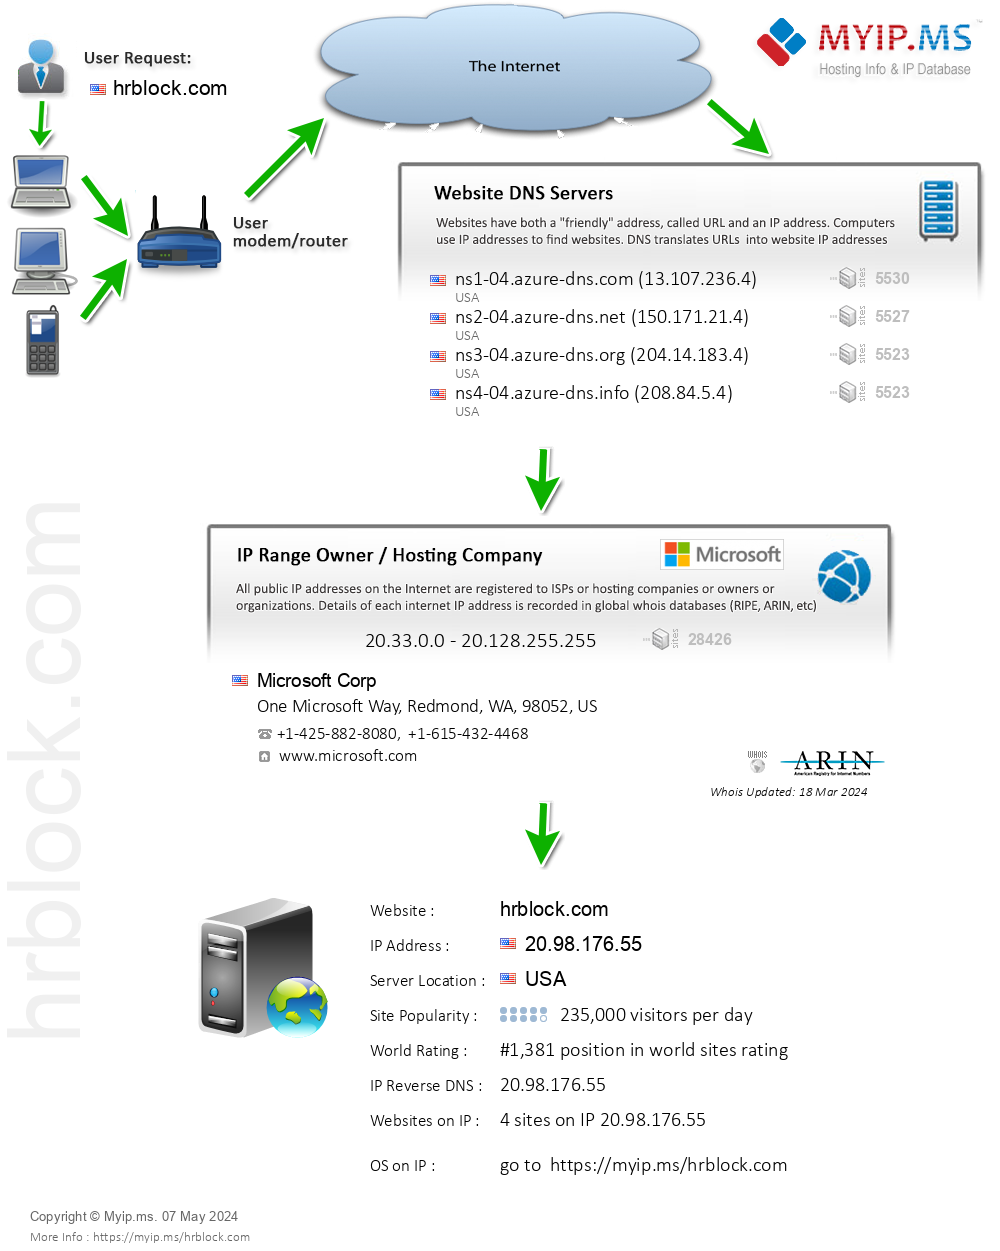 Hrblock.com - Website Hosting Visual IP Diagram